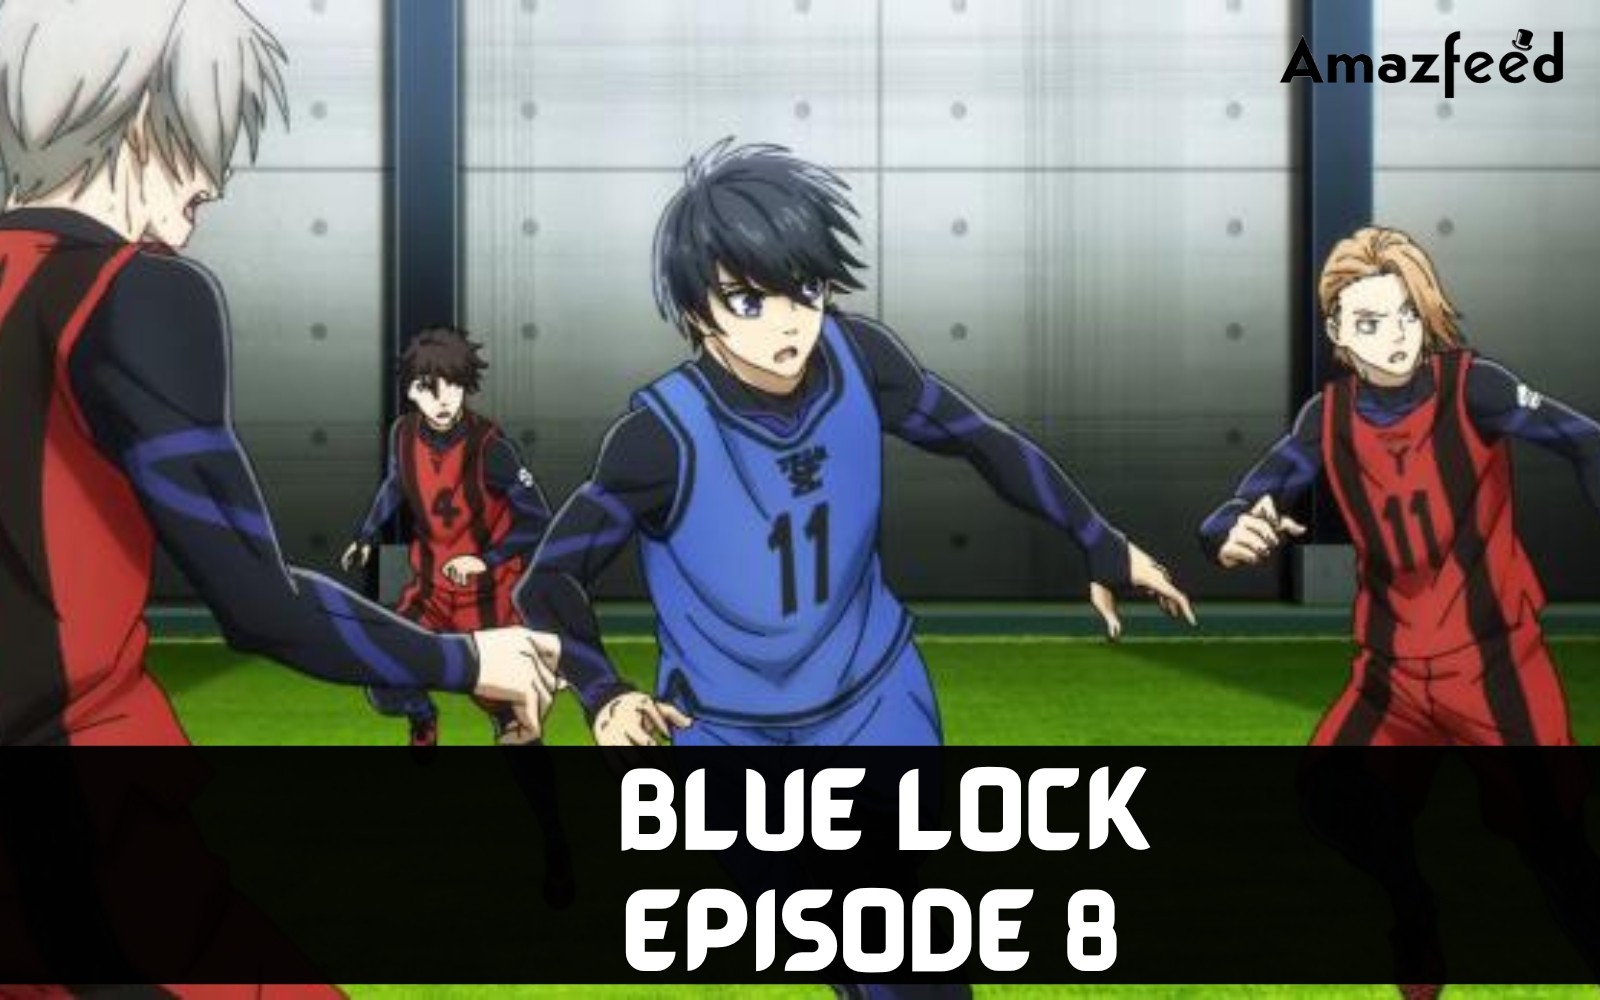 Blue Lock Episode 8 Release Date & Time